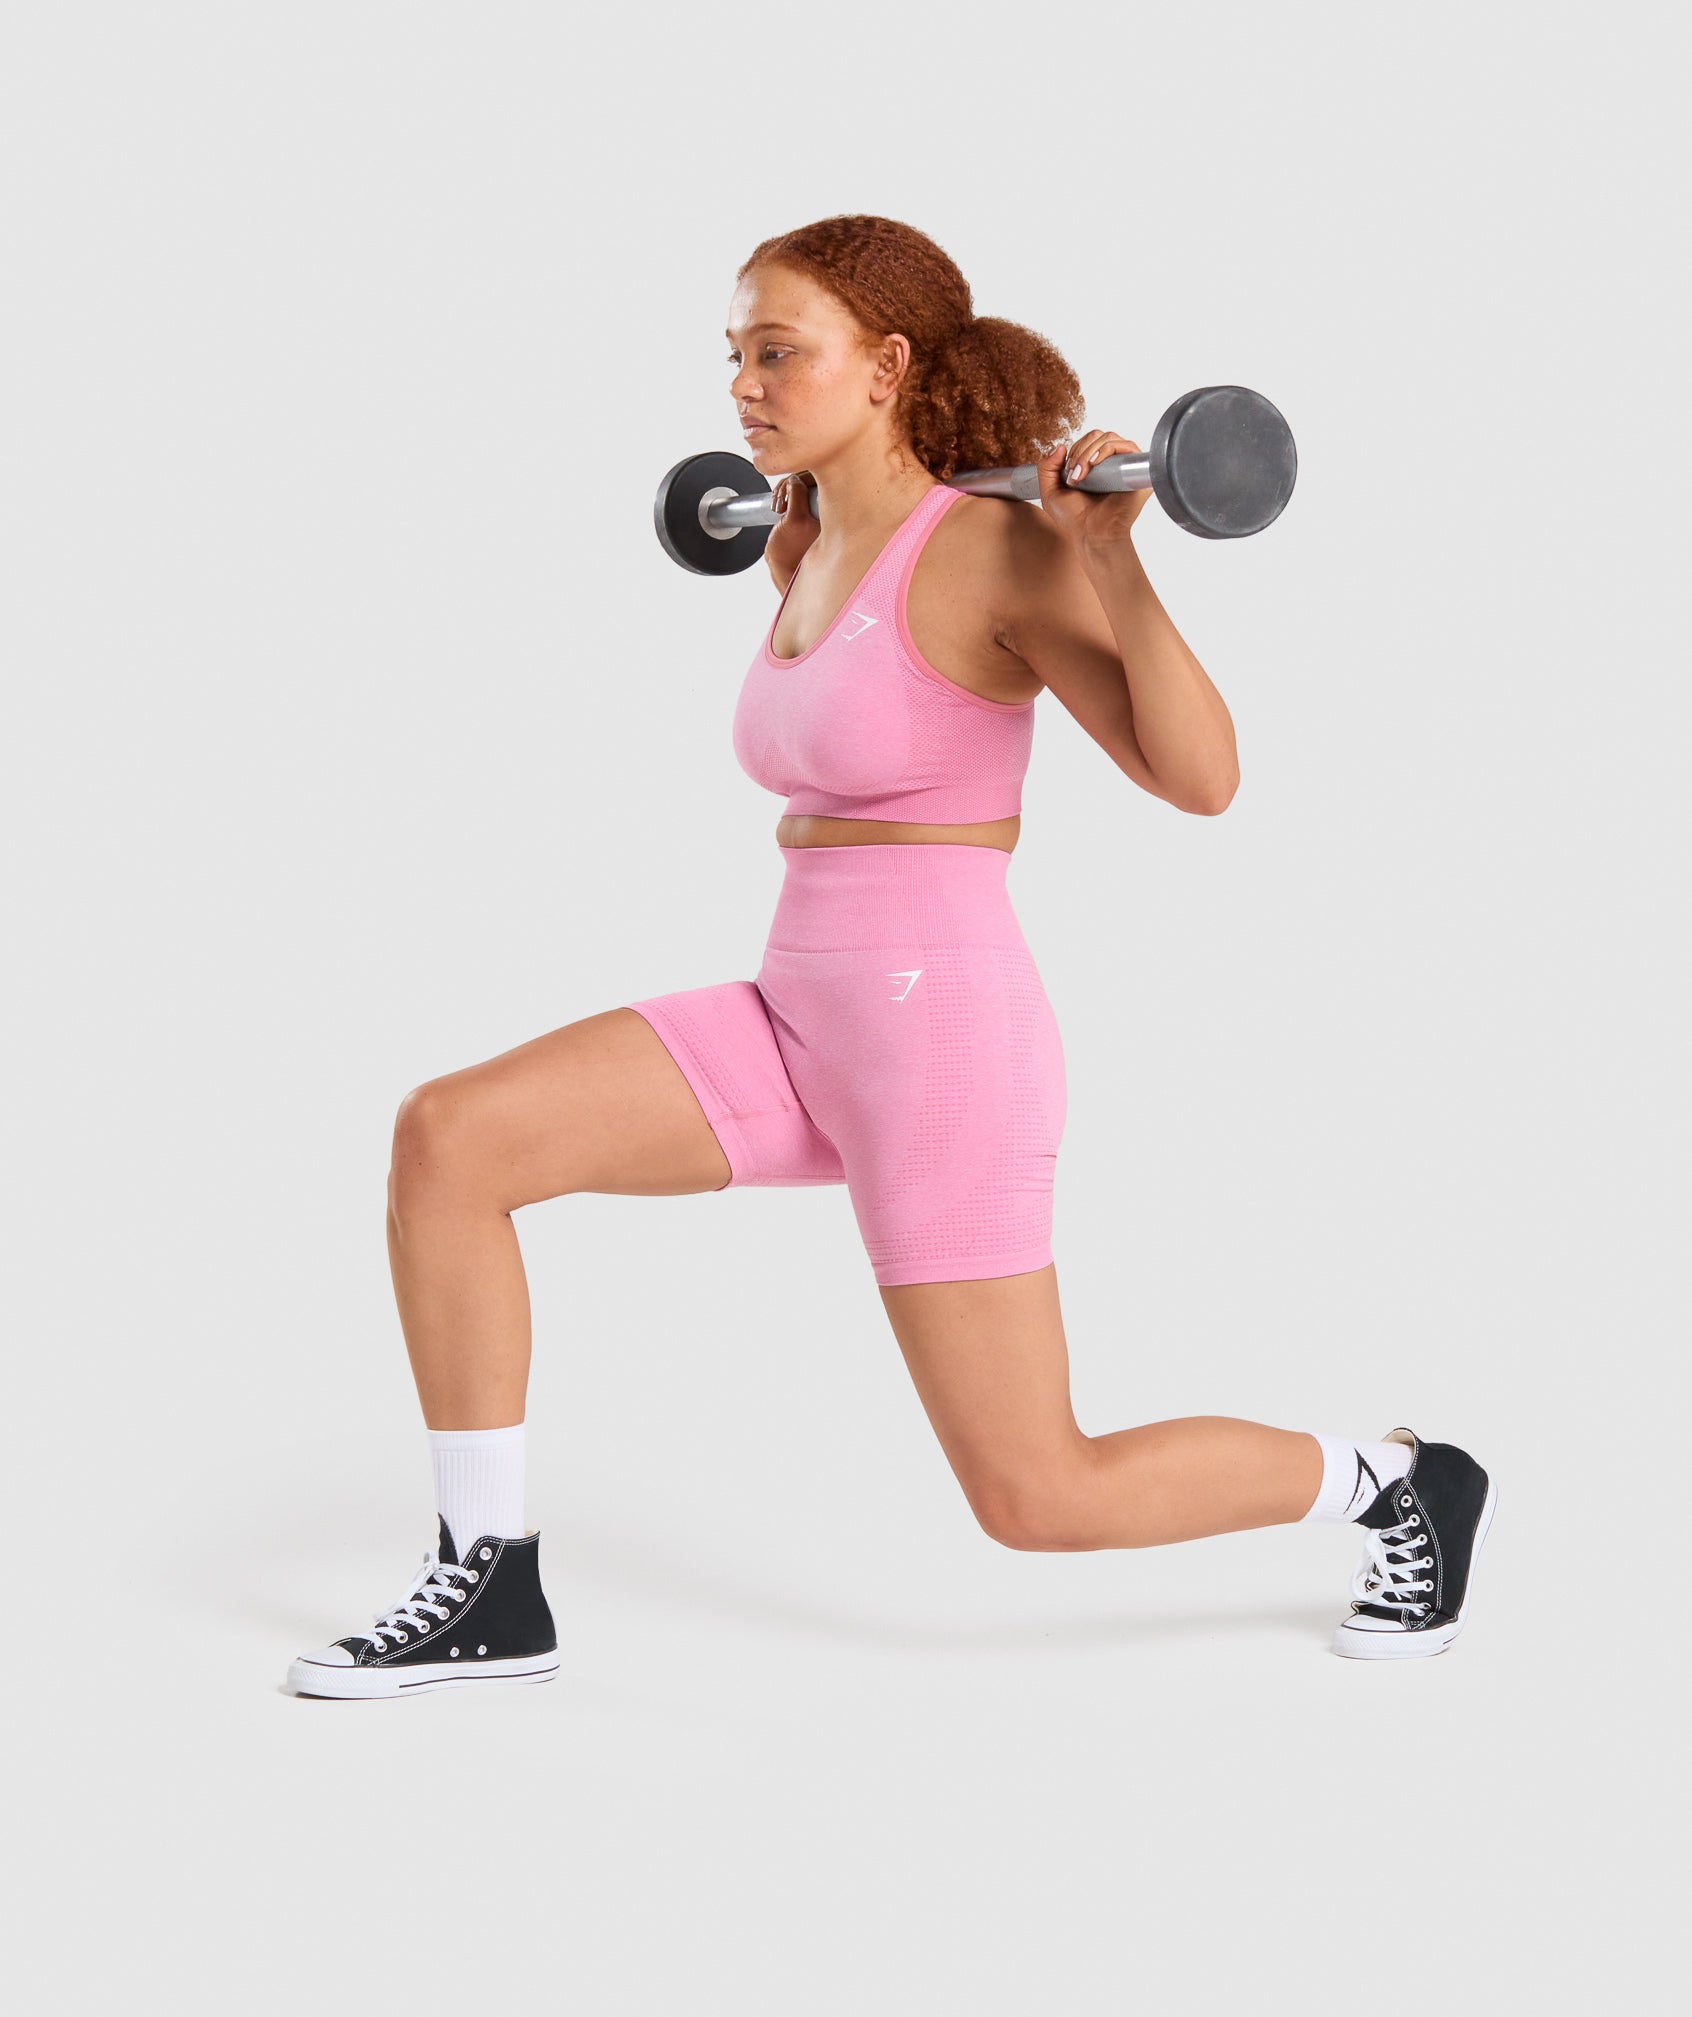 Gymshark vital seamless 2.0 shorts pink marl - $48 - From Flipped